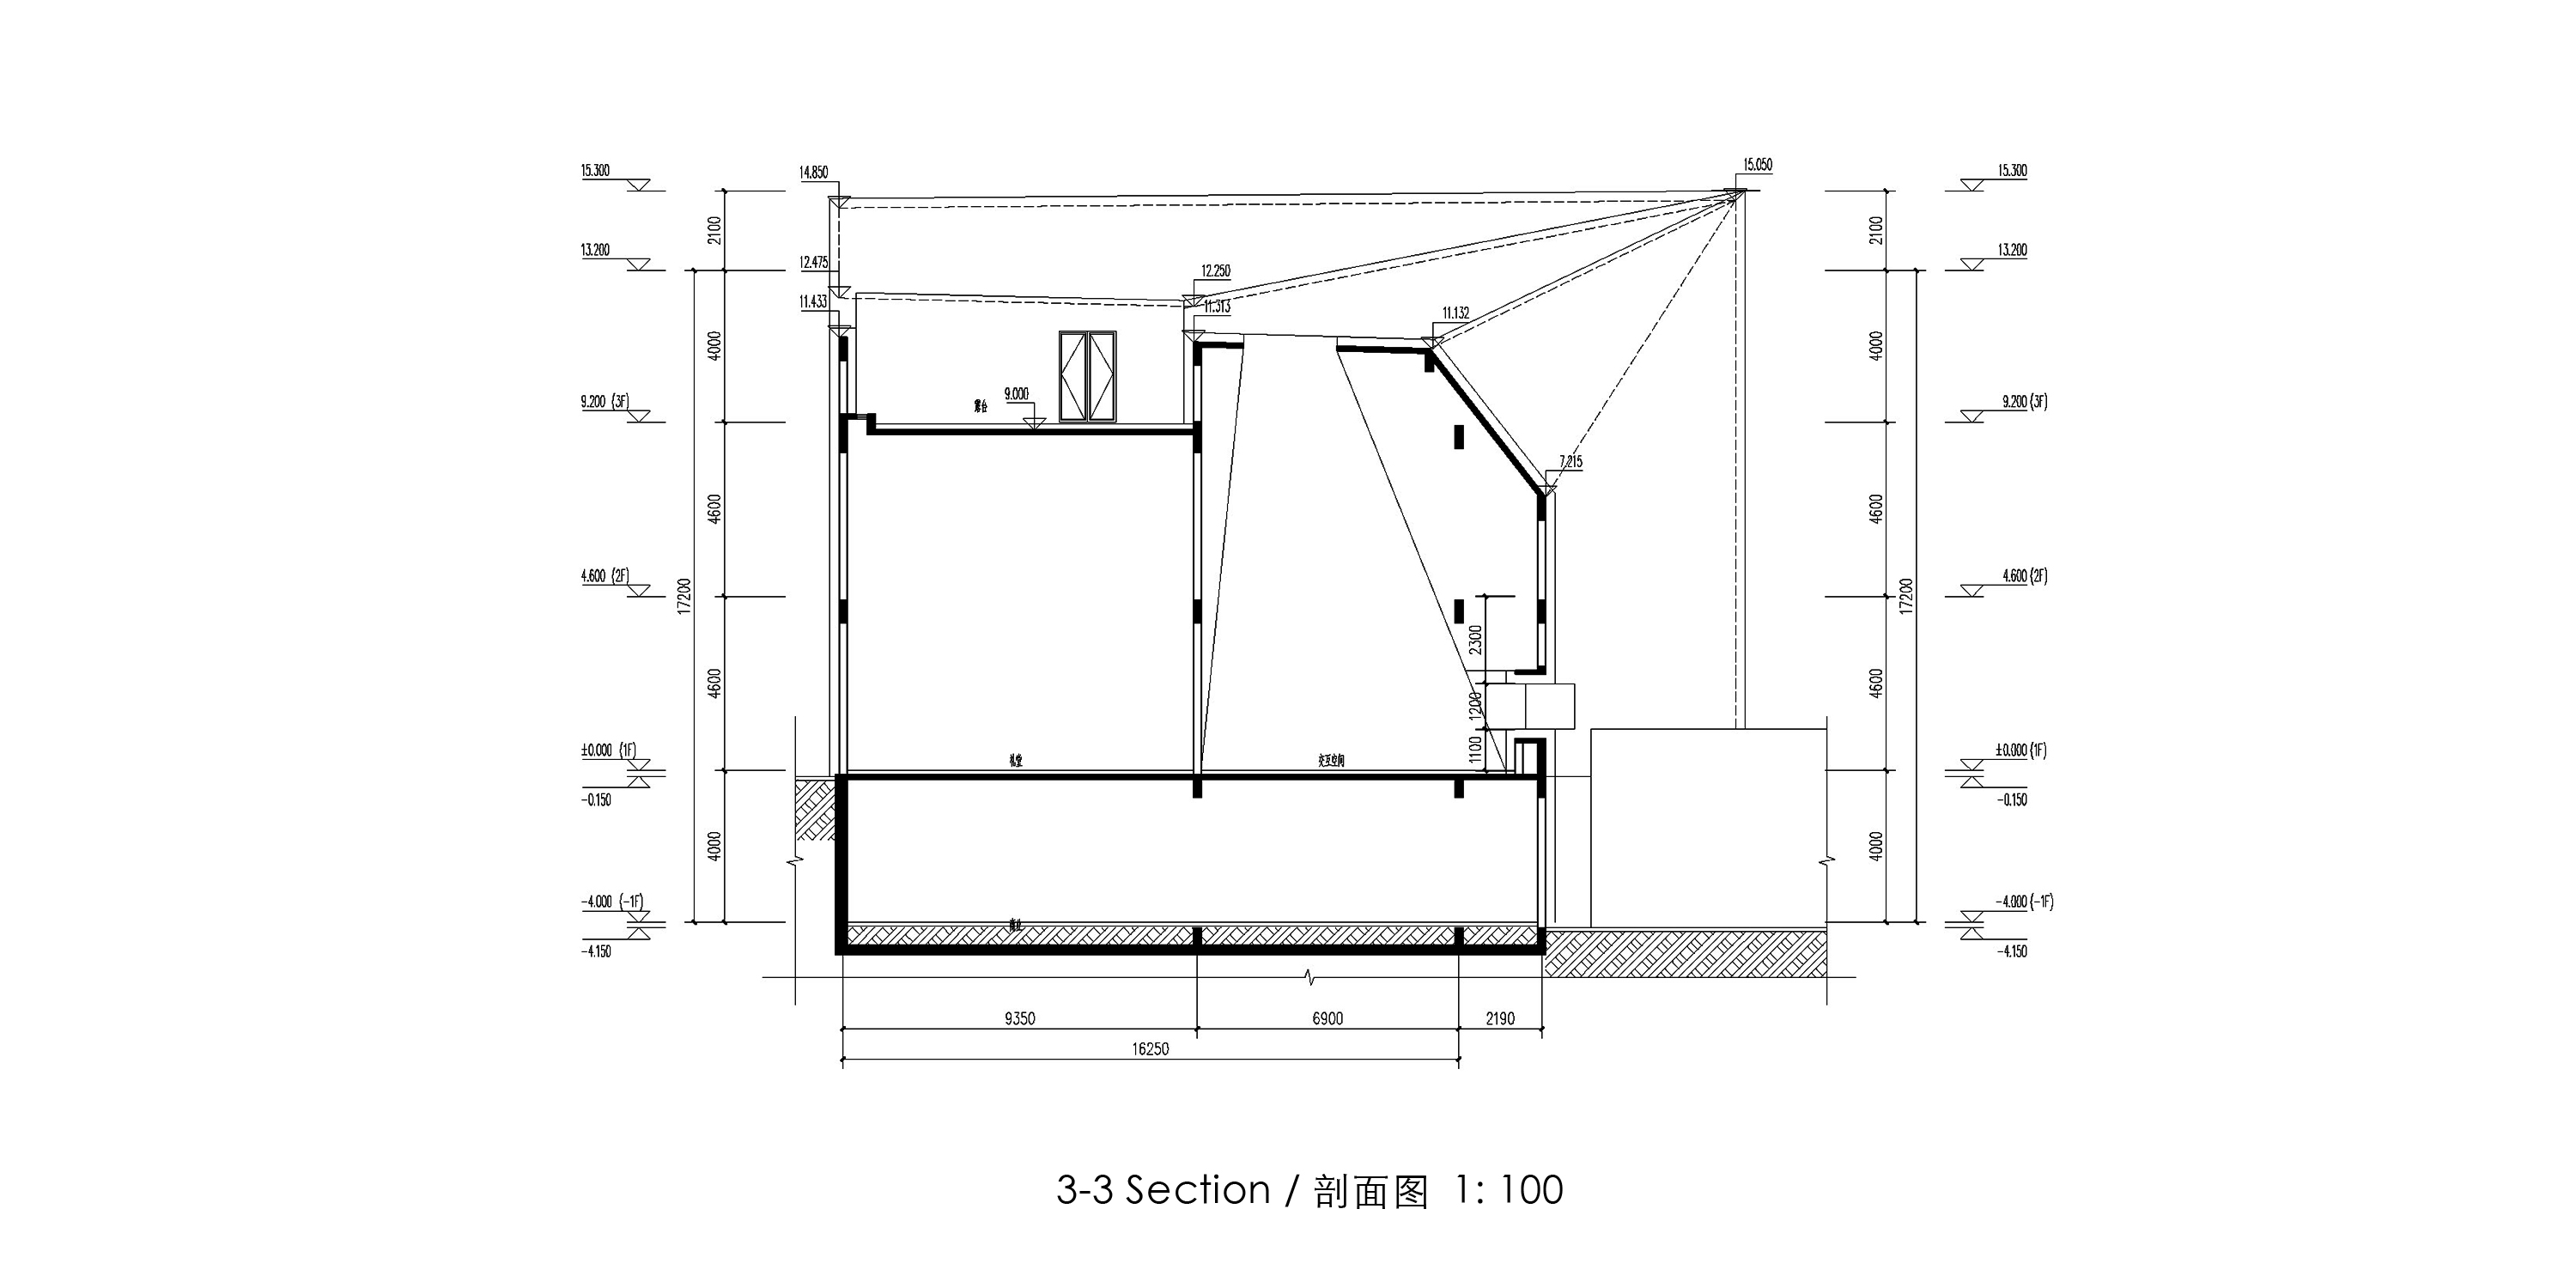 Section 3-3.jpg